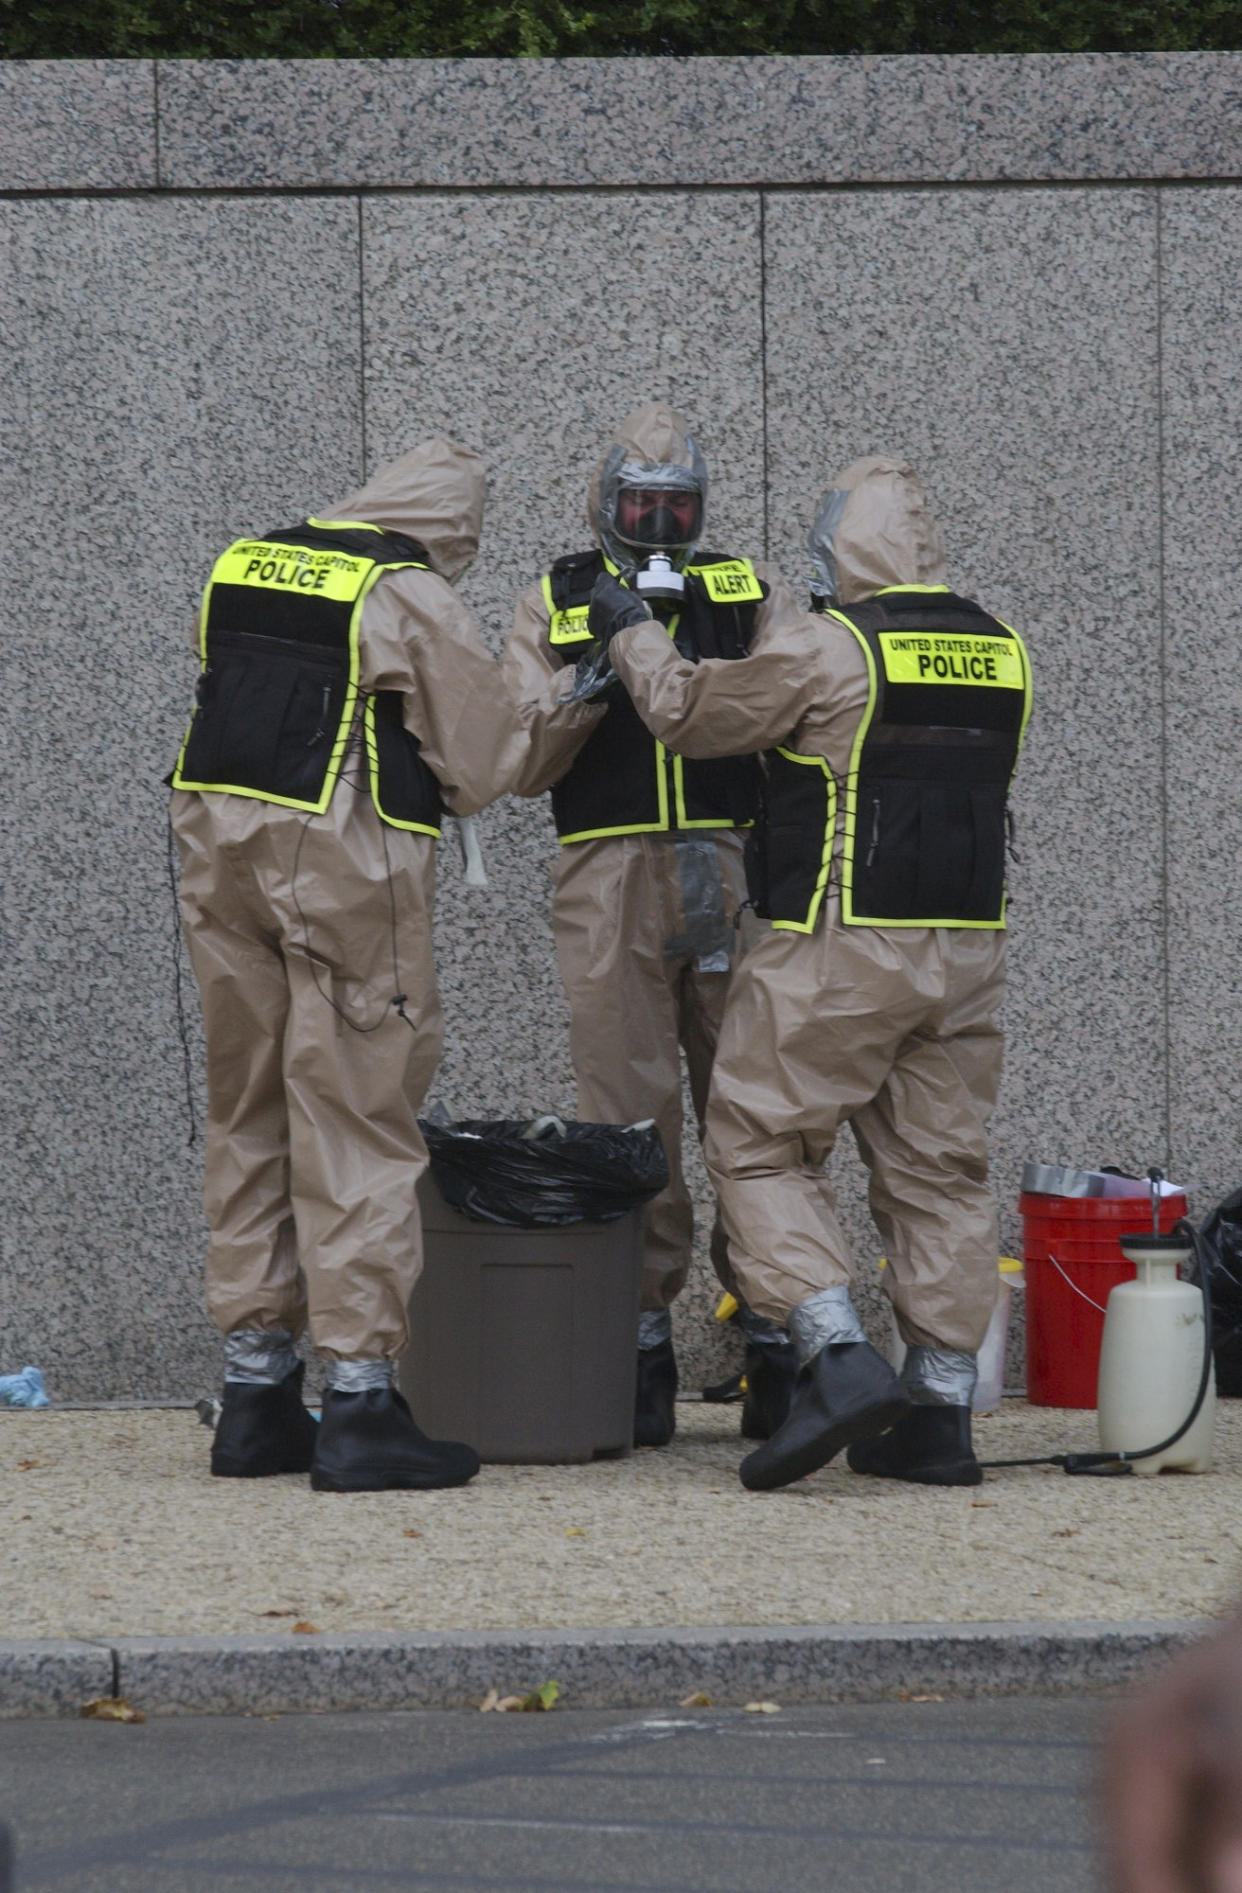 Three people in hazmat suits prepare to enter a building.